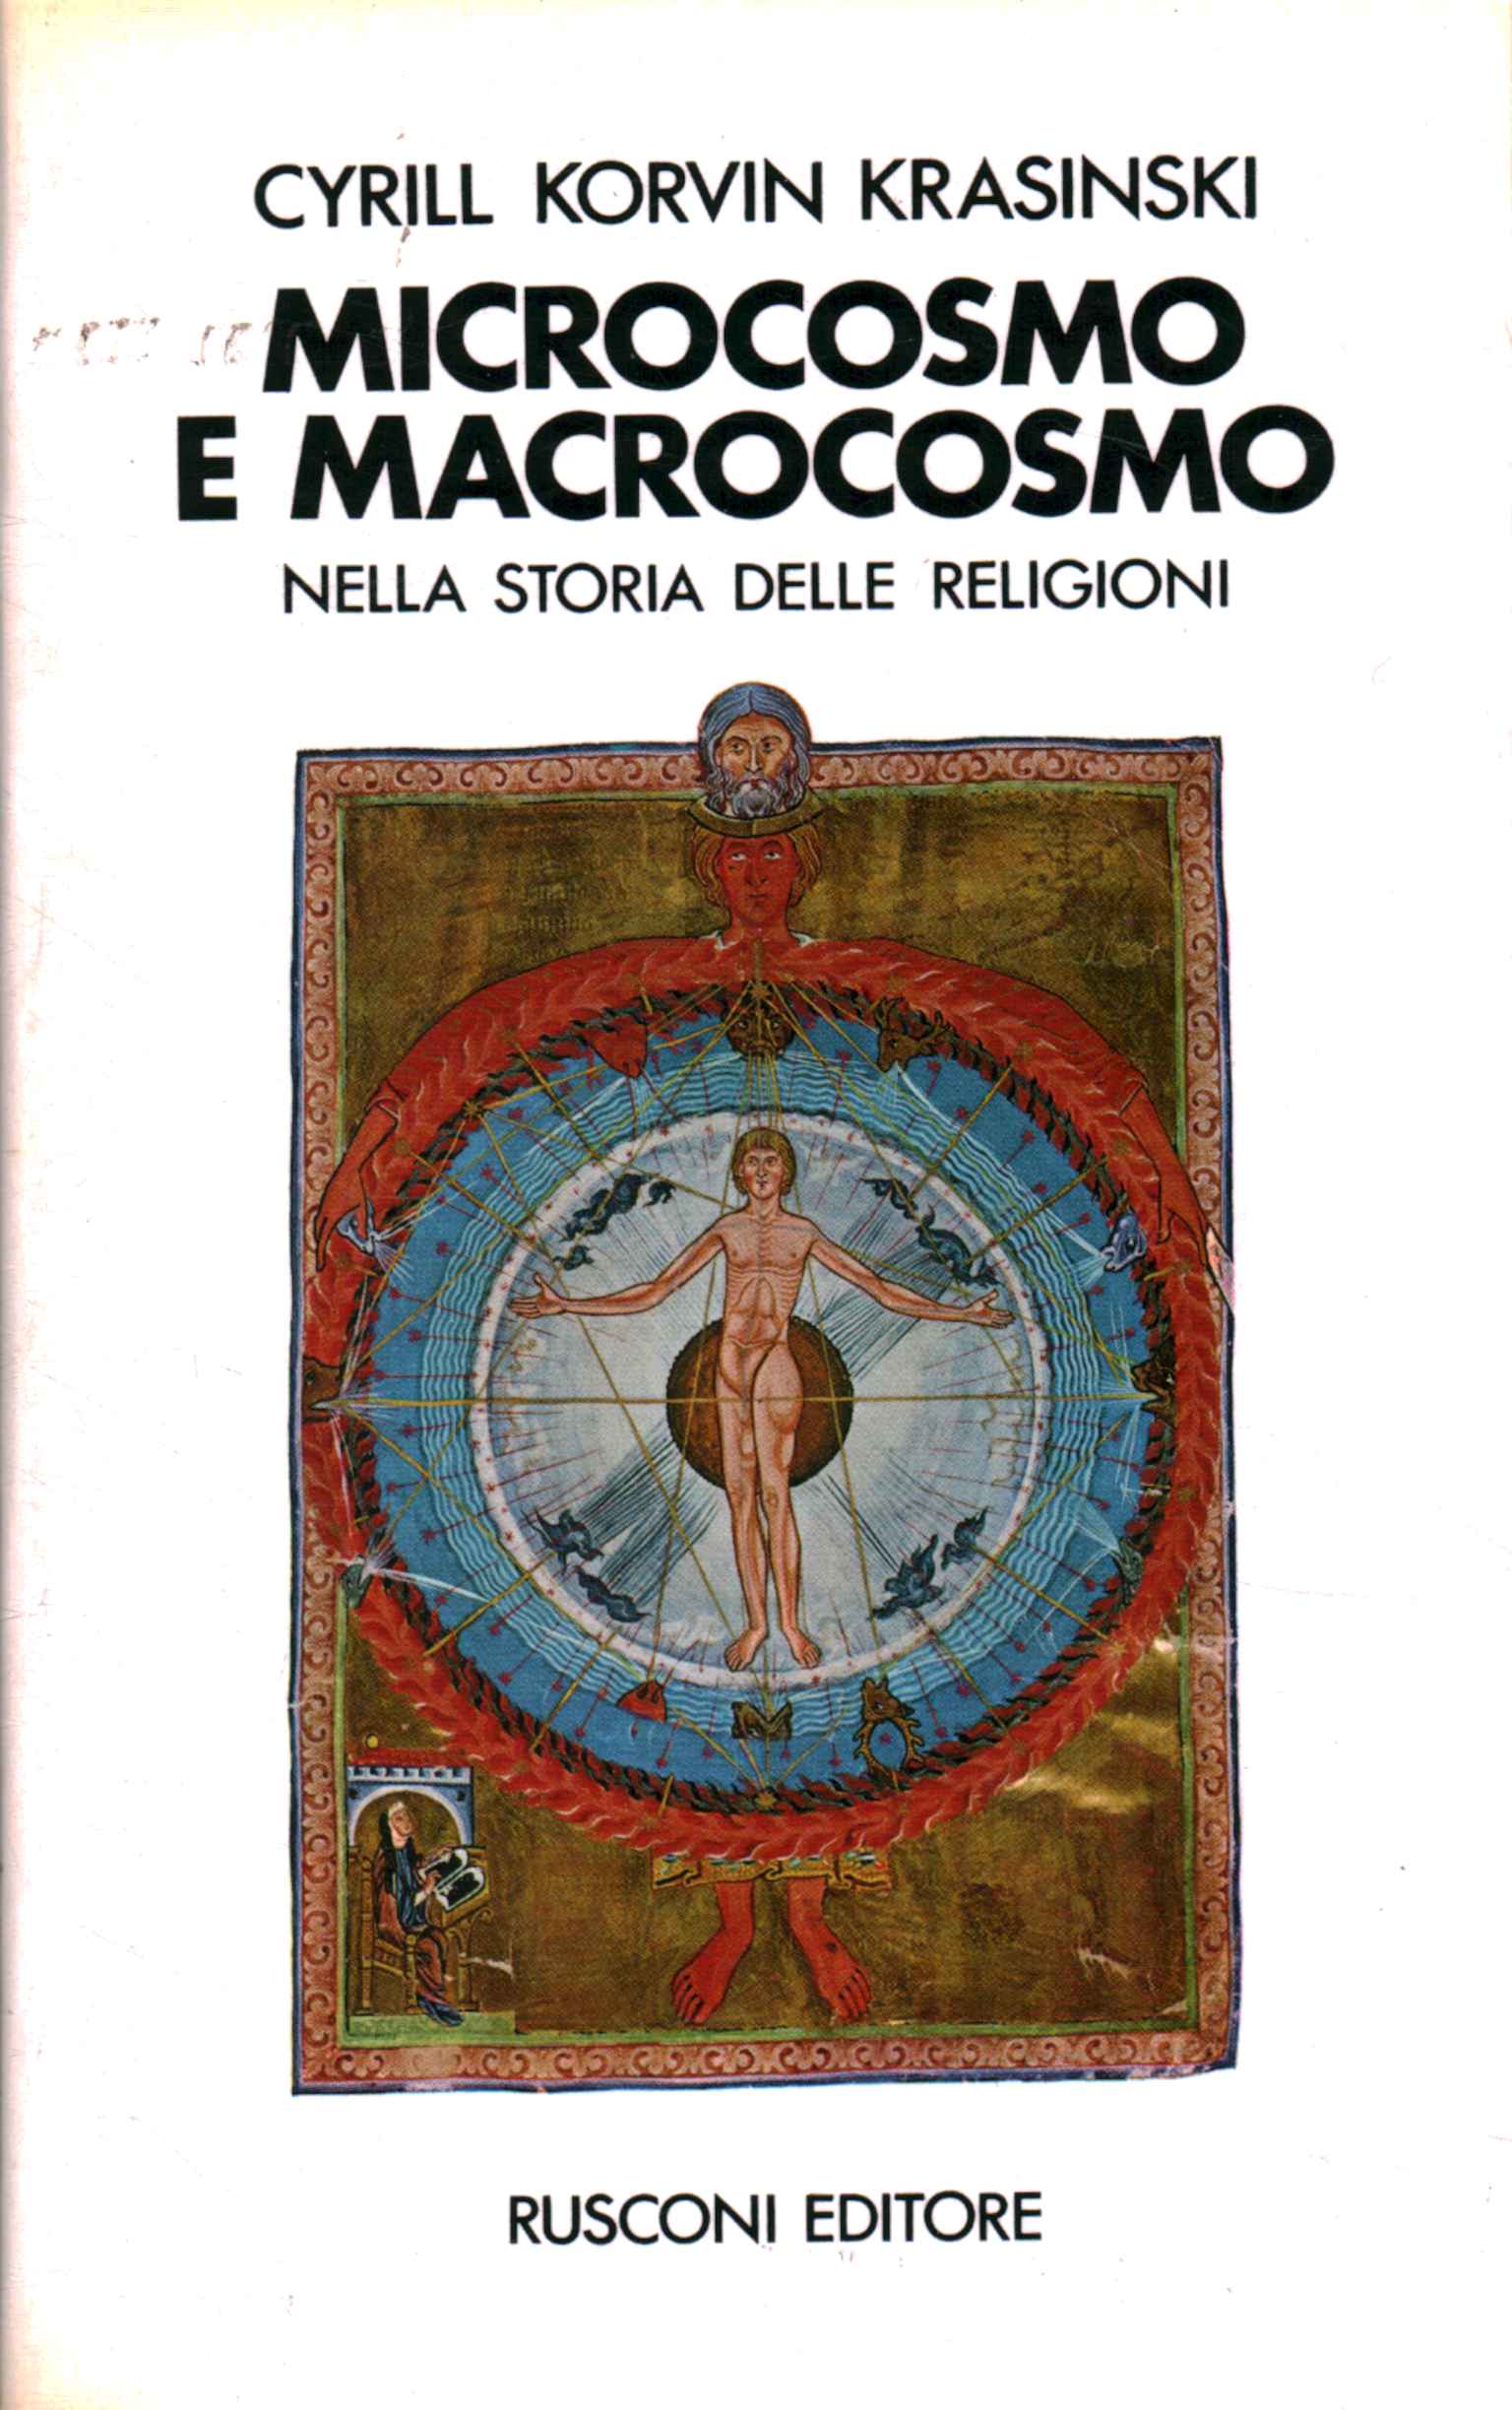 Microcosm and macrocosm